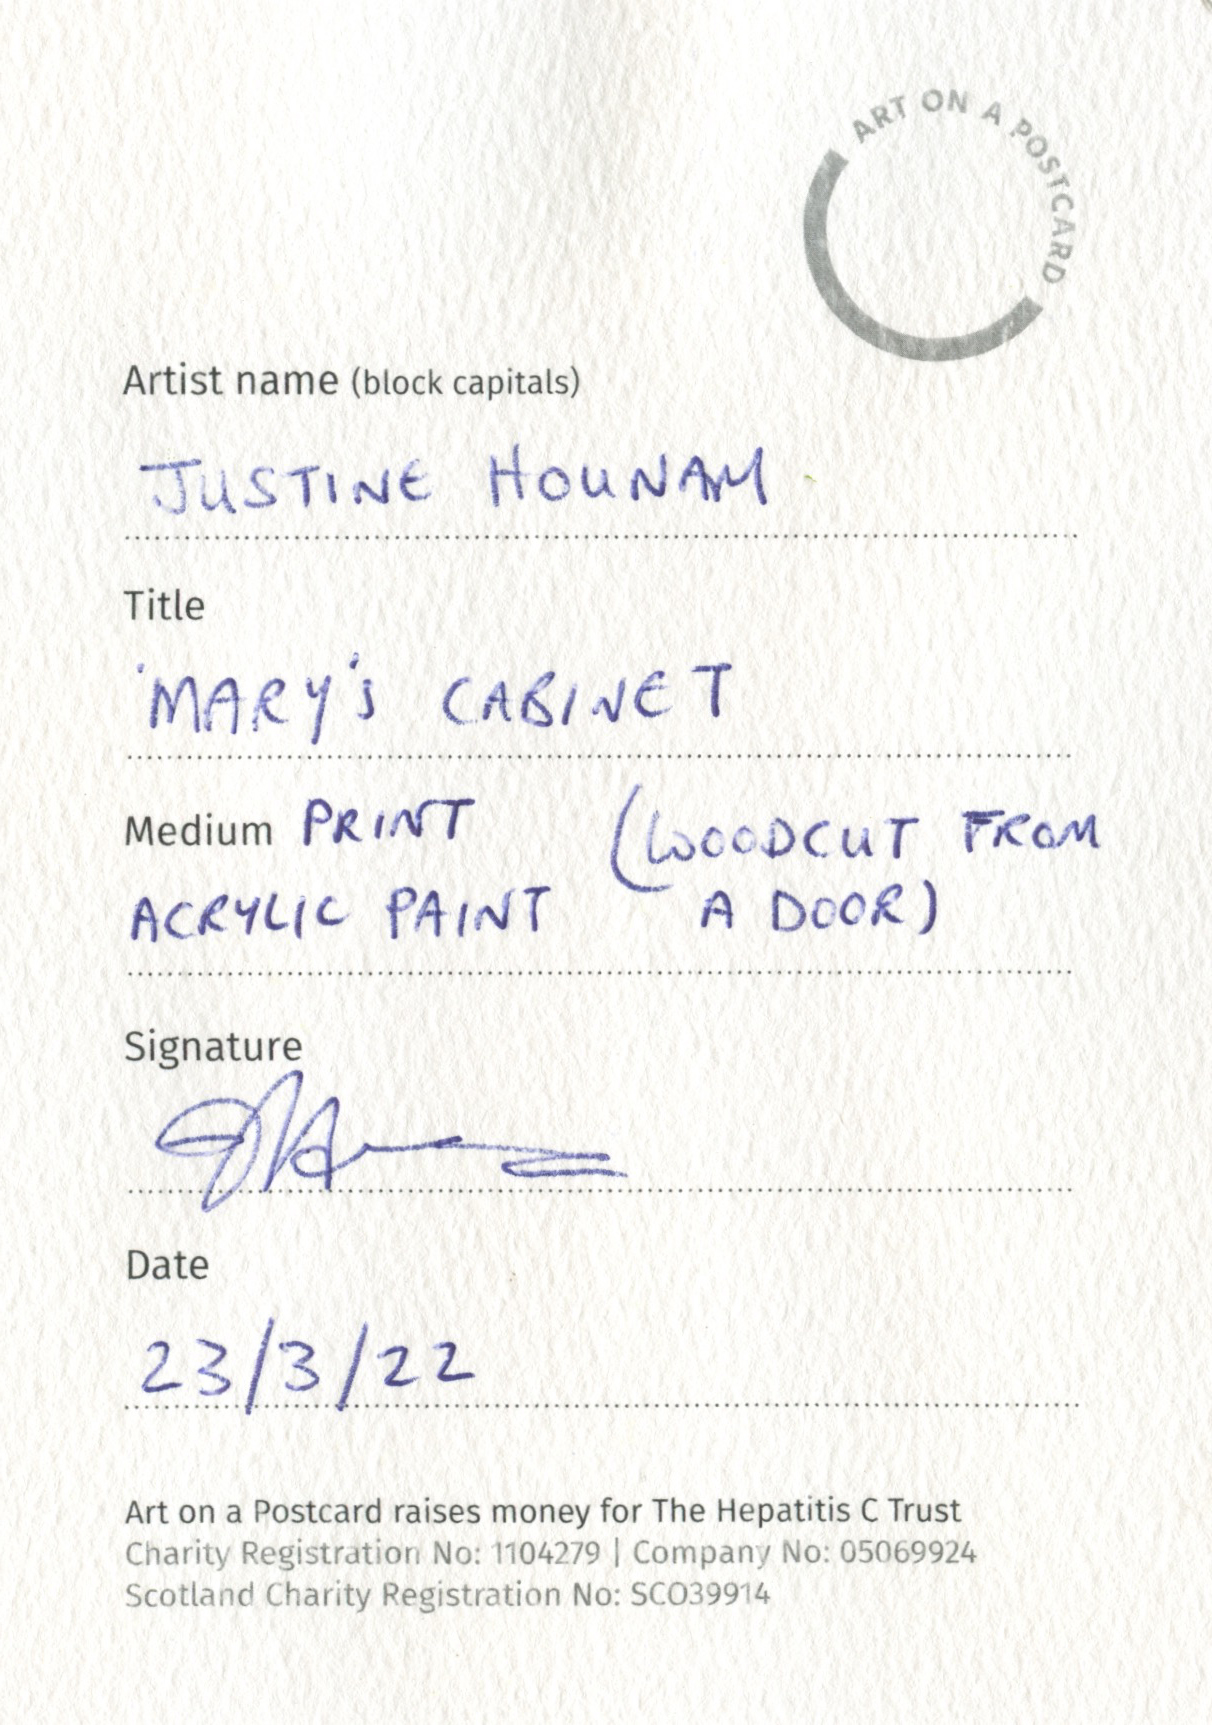 69. Justine Hounam - Mary's Cabinet (3) - BACK